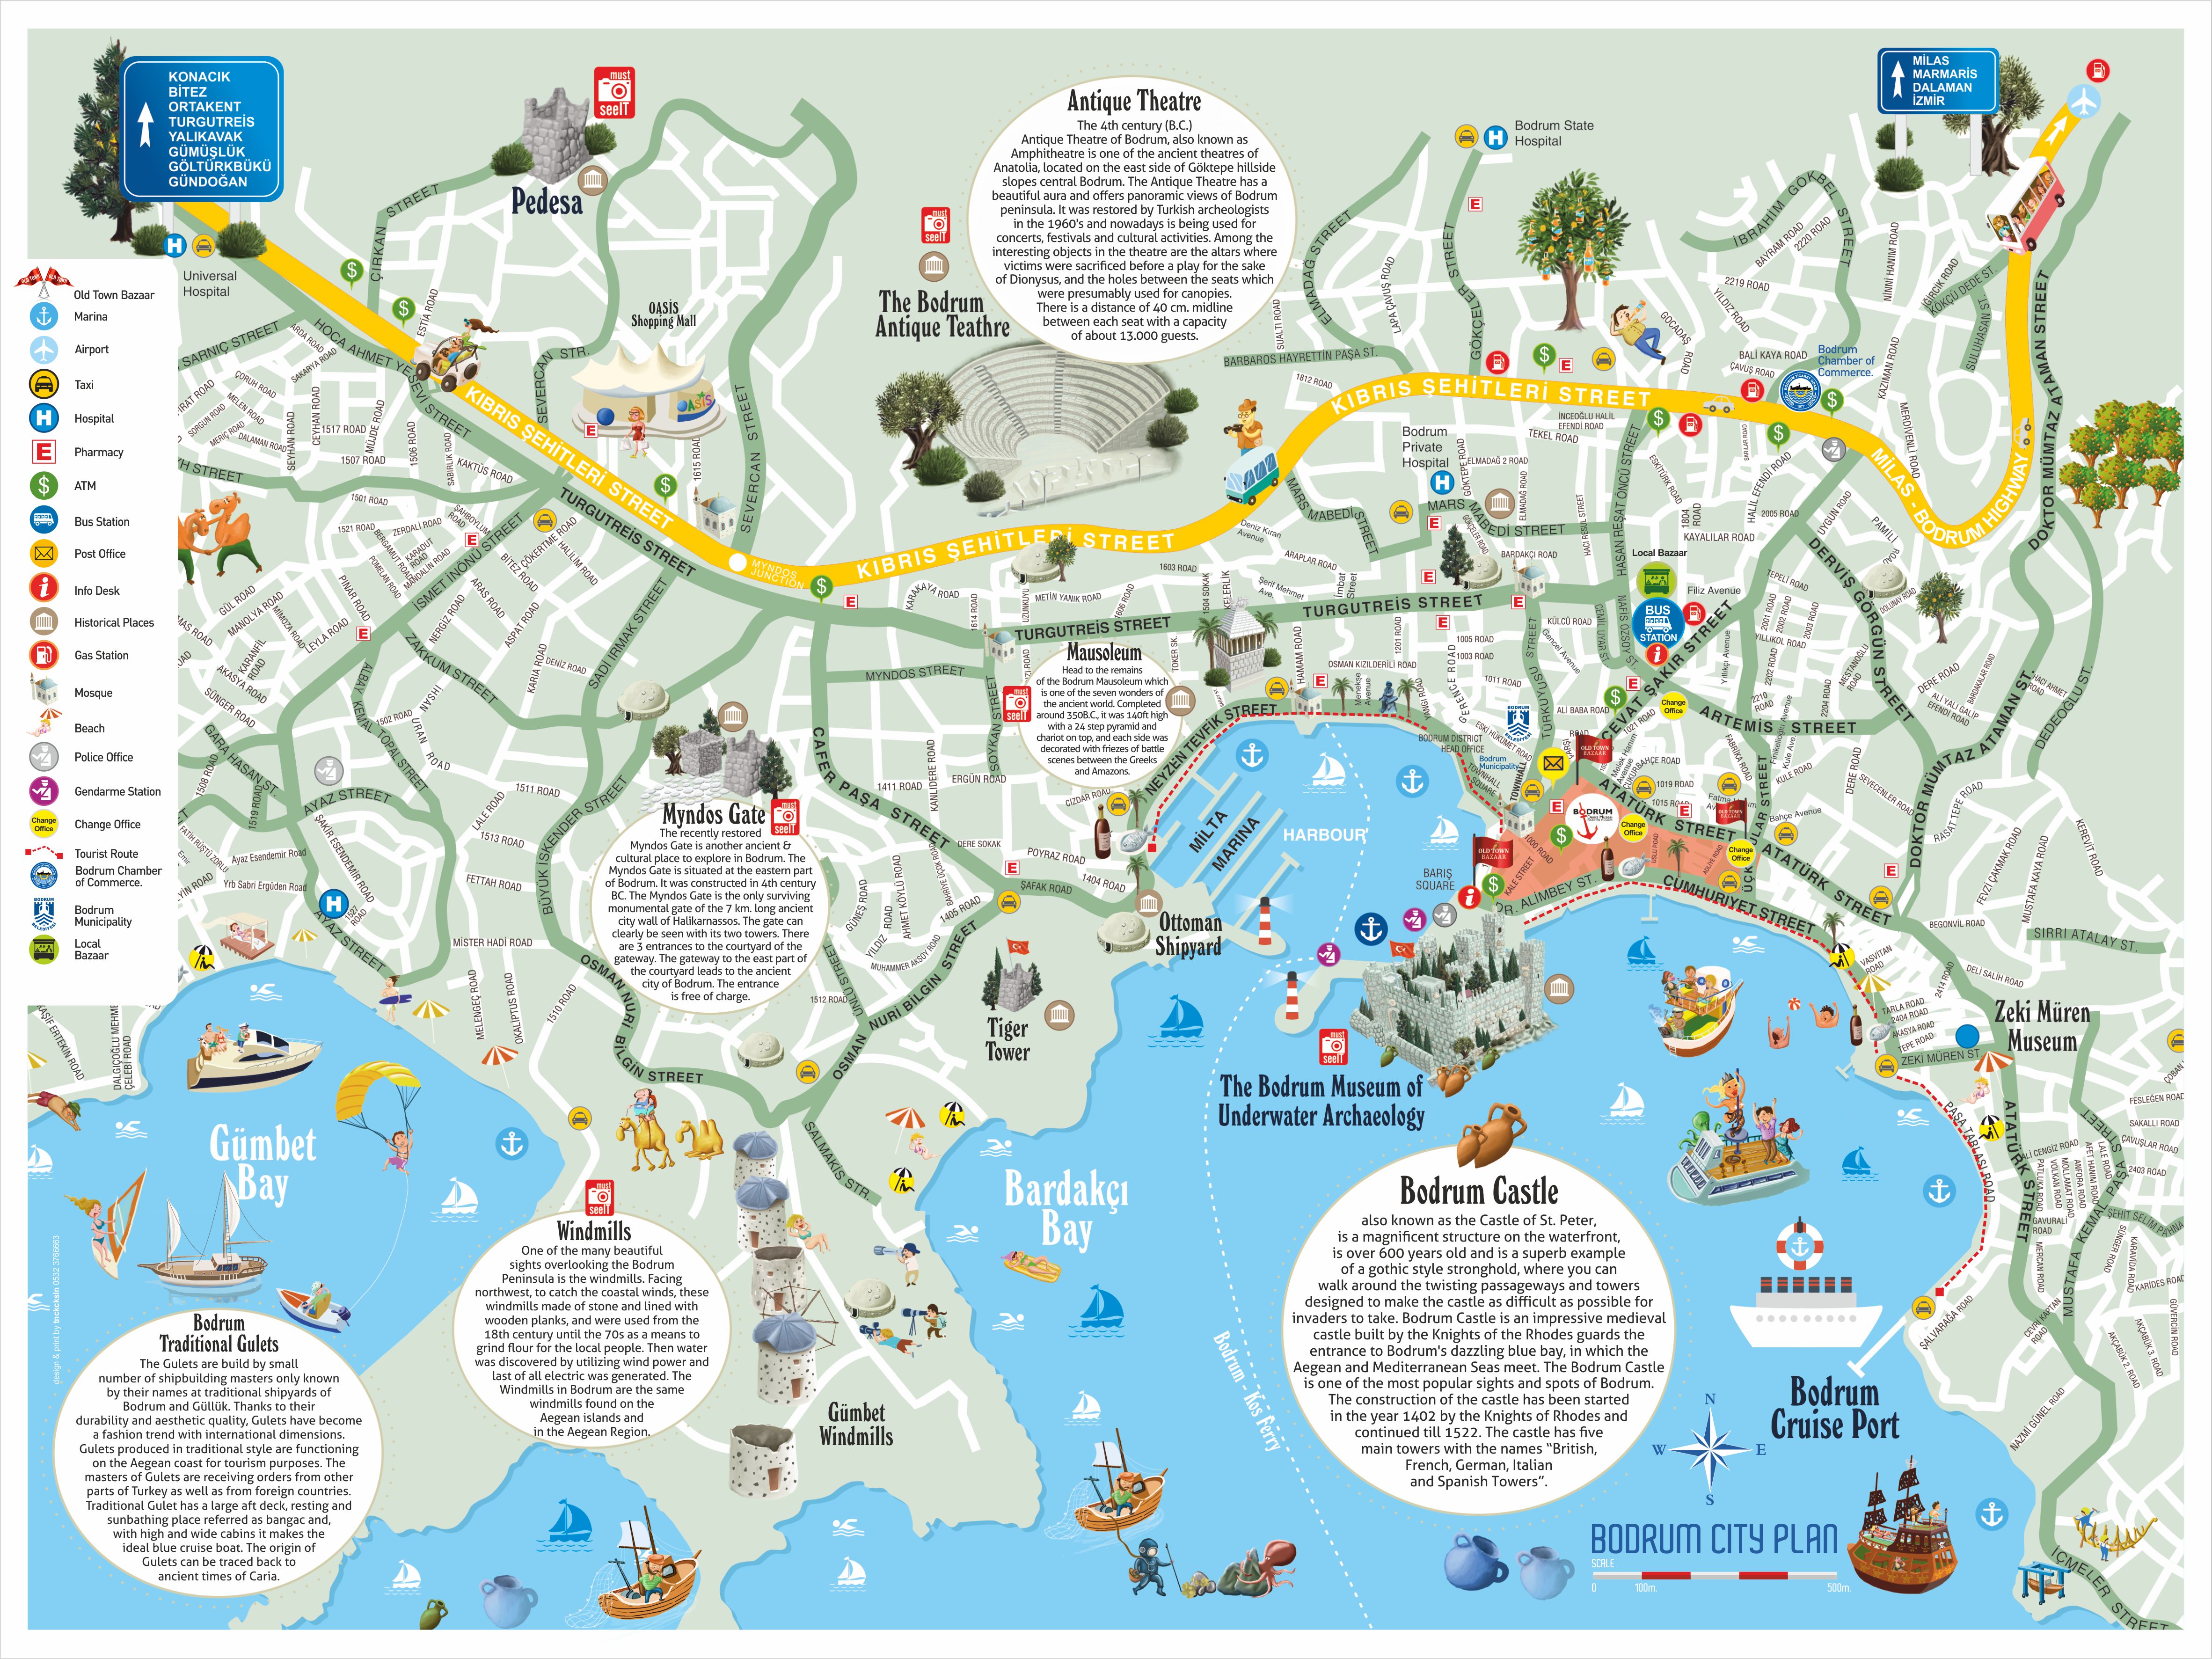 Turistik Bodrum Haritası - Tourist Bodrum Map